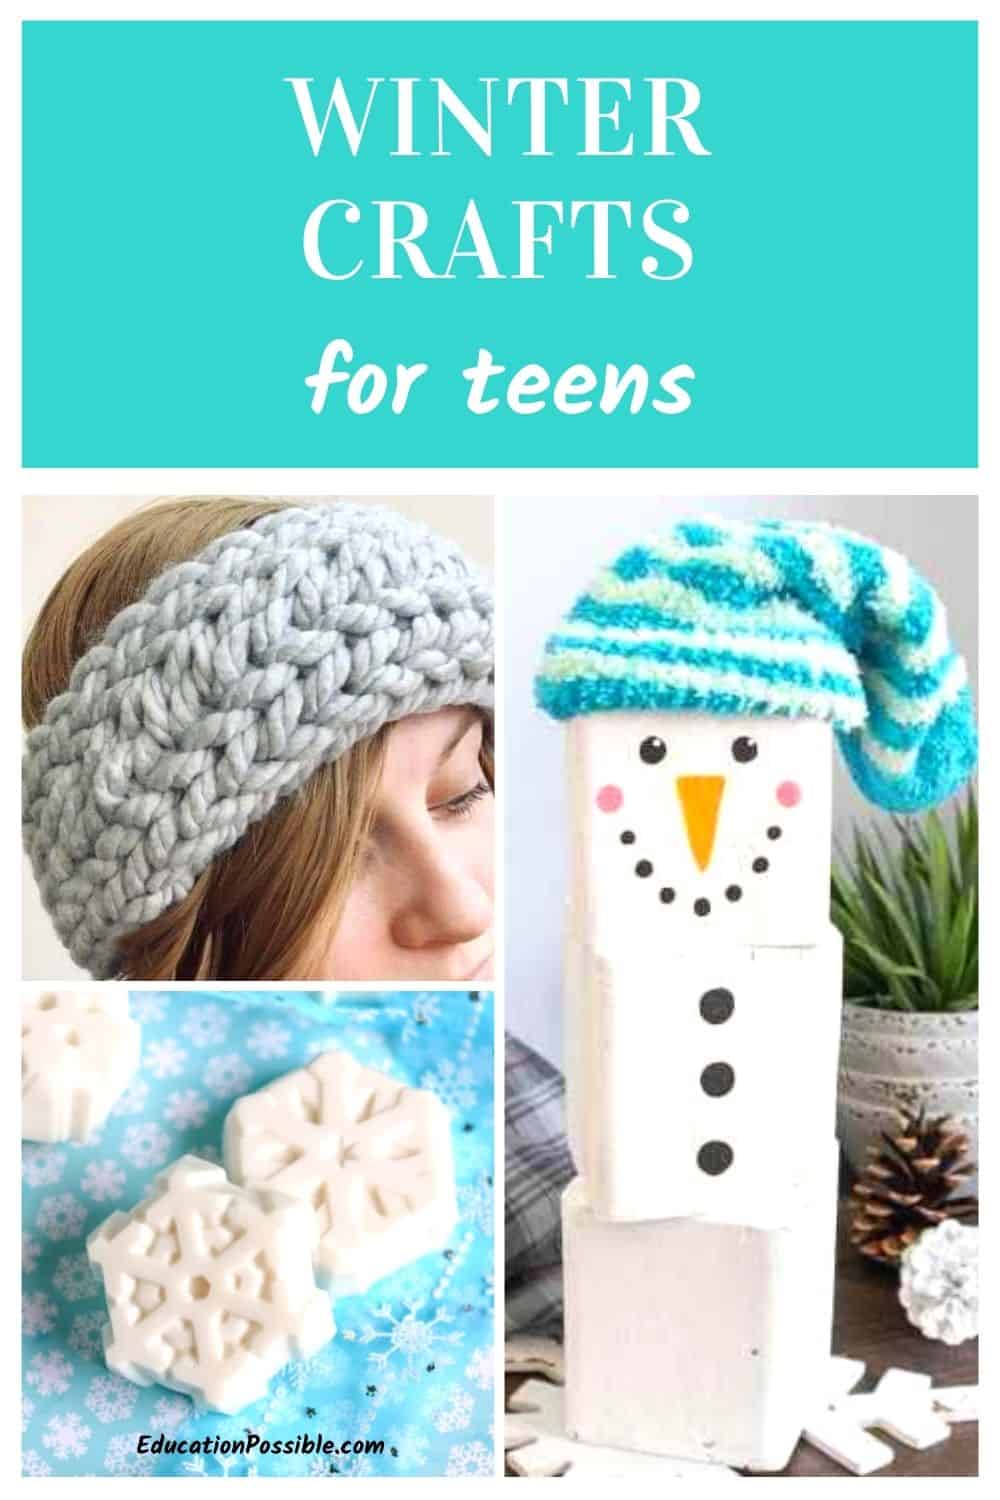 4 winter DIY crafts. Knitted headband, block snowman, snowflake soap